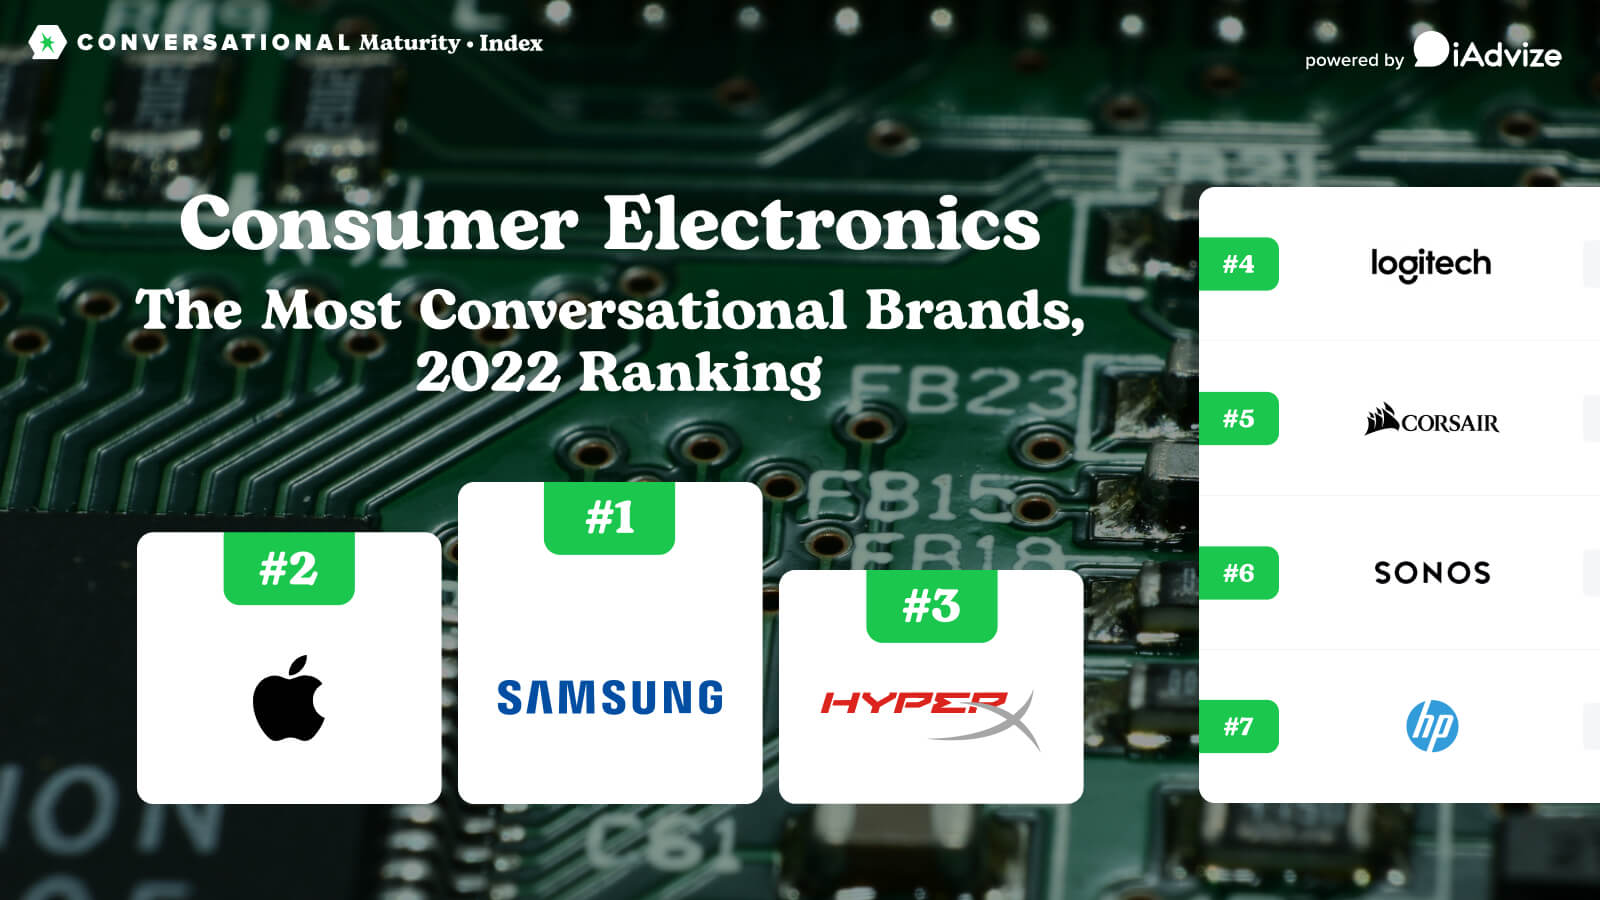 Conversational Maturity Index: Consumer Electronics Brands 2022 Rankings